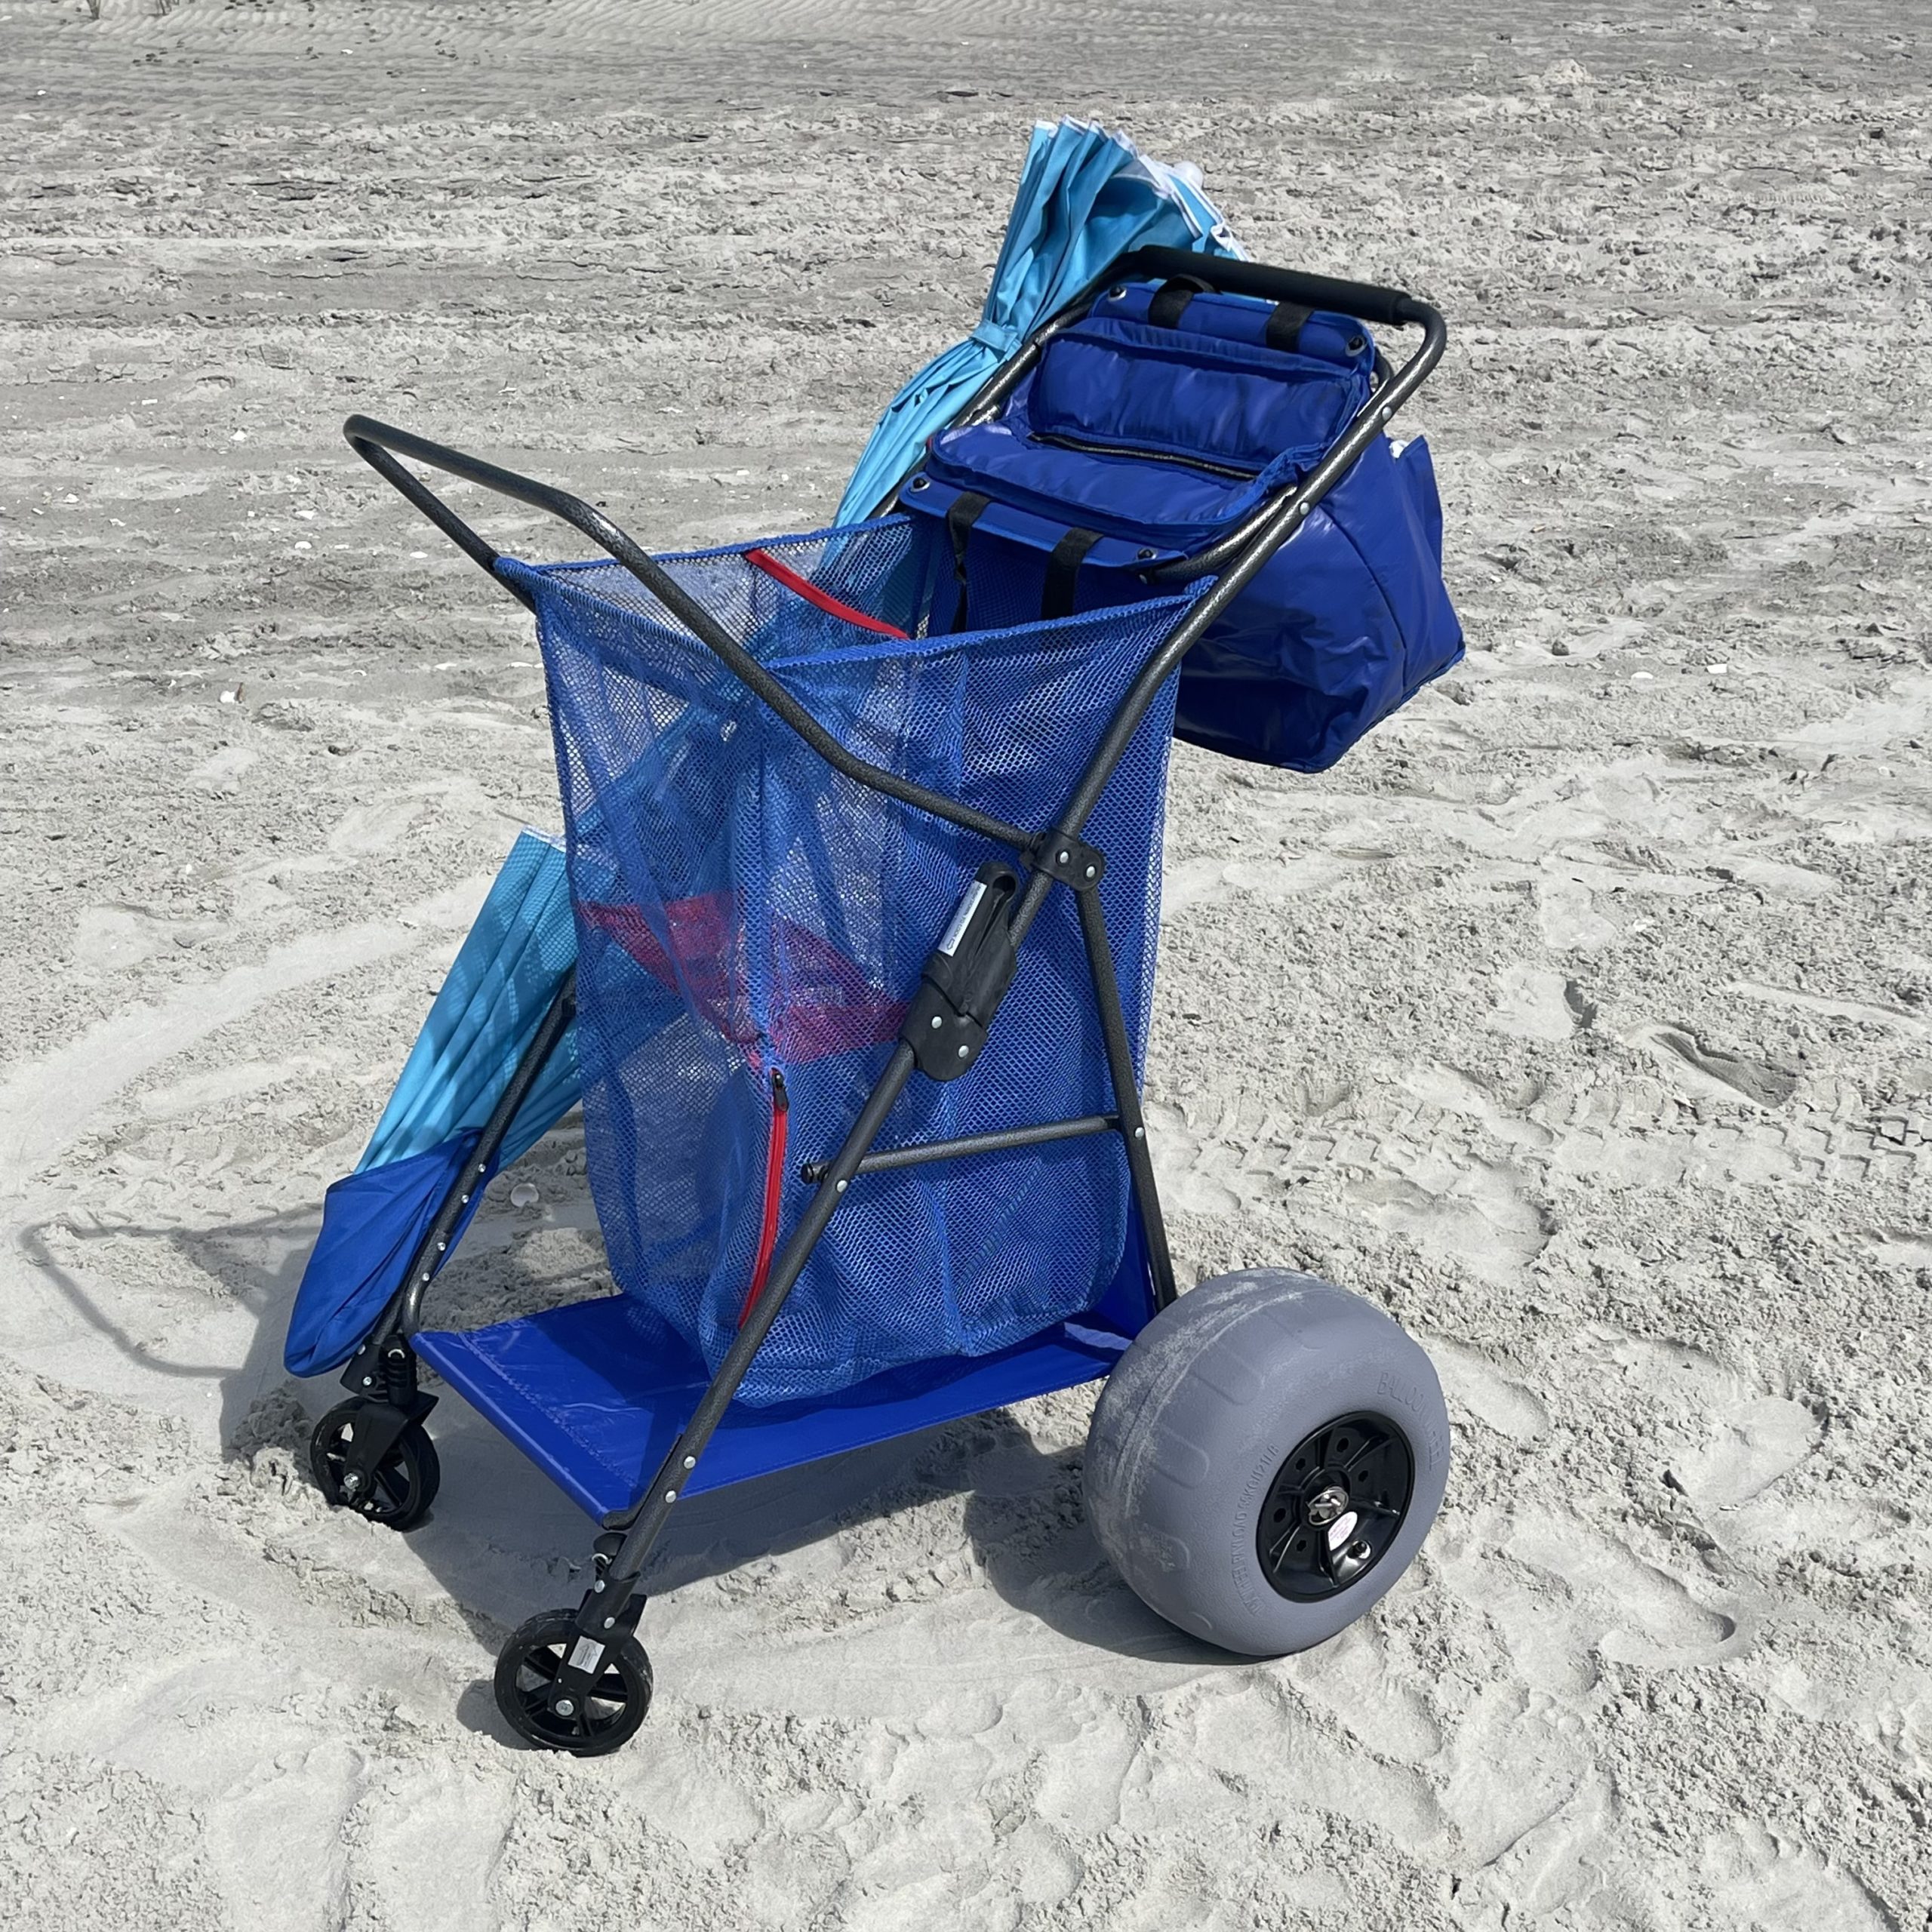 Balloon Wheel Beach Cart - Rio Wonder Wheeler Limited Edition | Glampin' Life